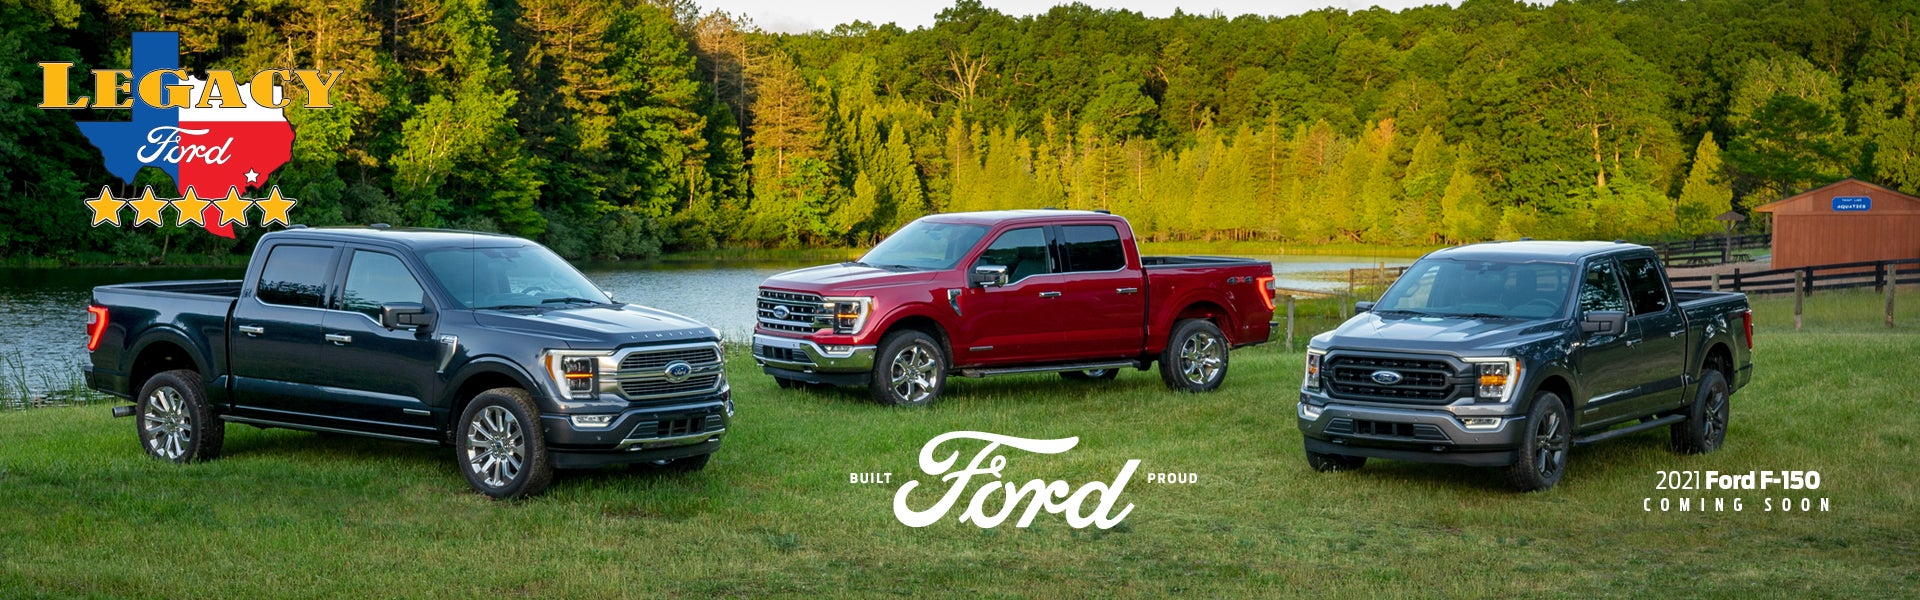 Ford Dealership | Cars For Sale in Rosenberg, TX | Legacy Ford